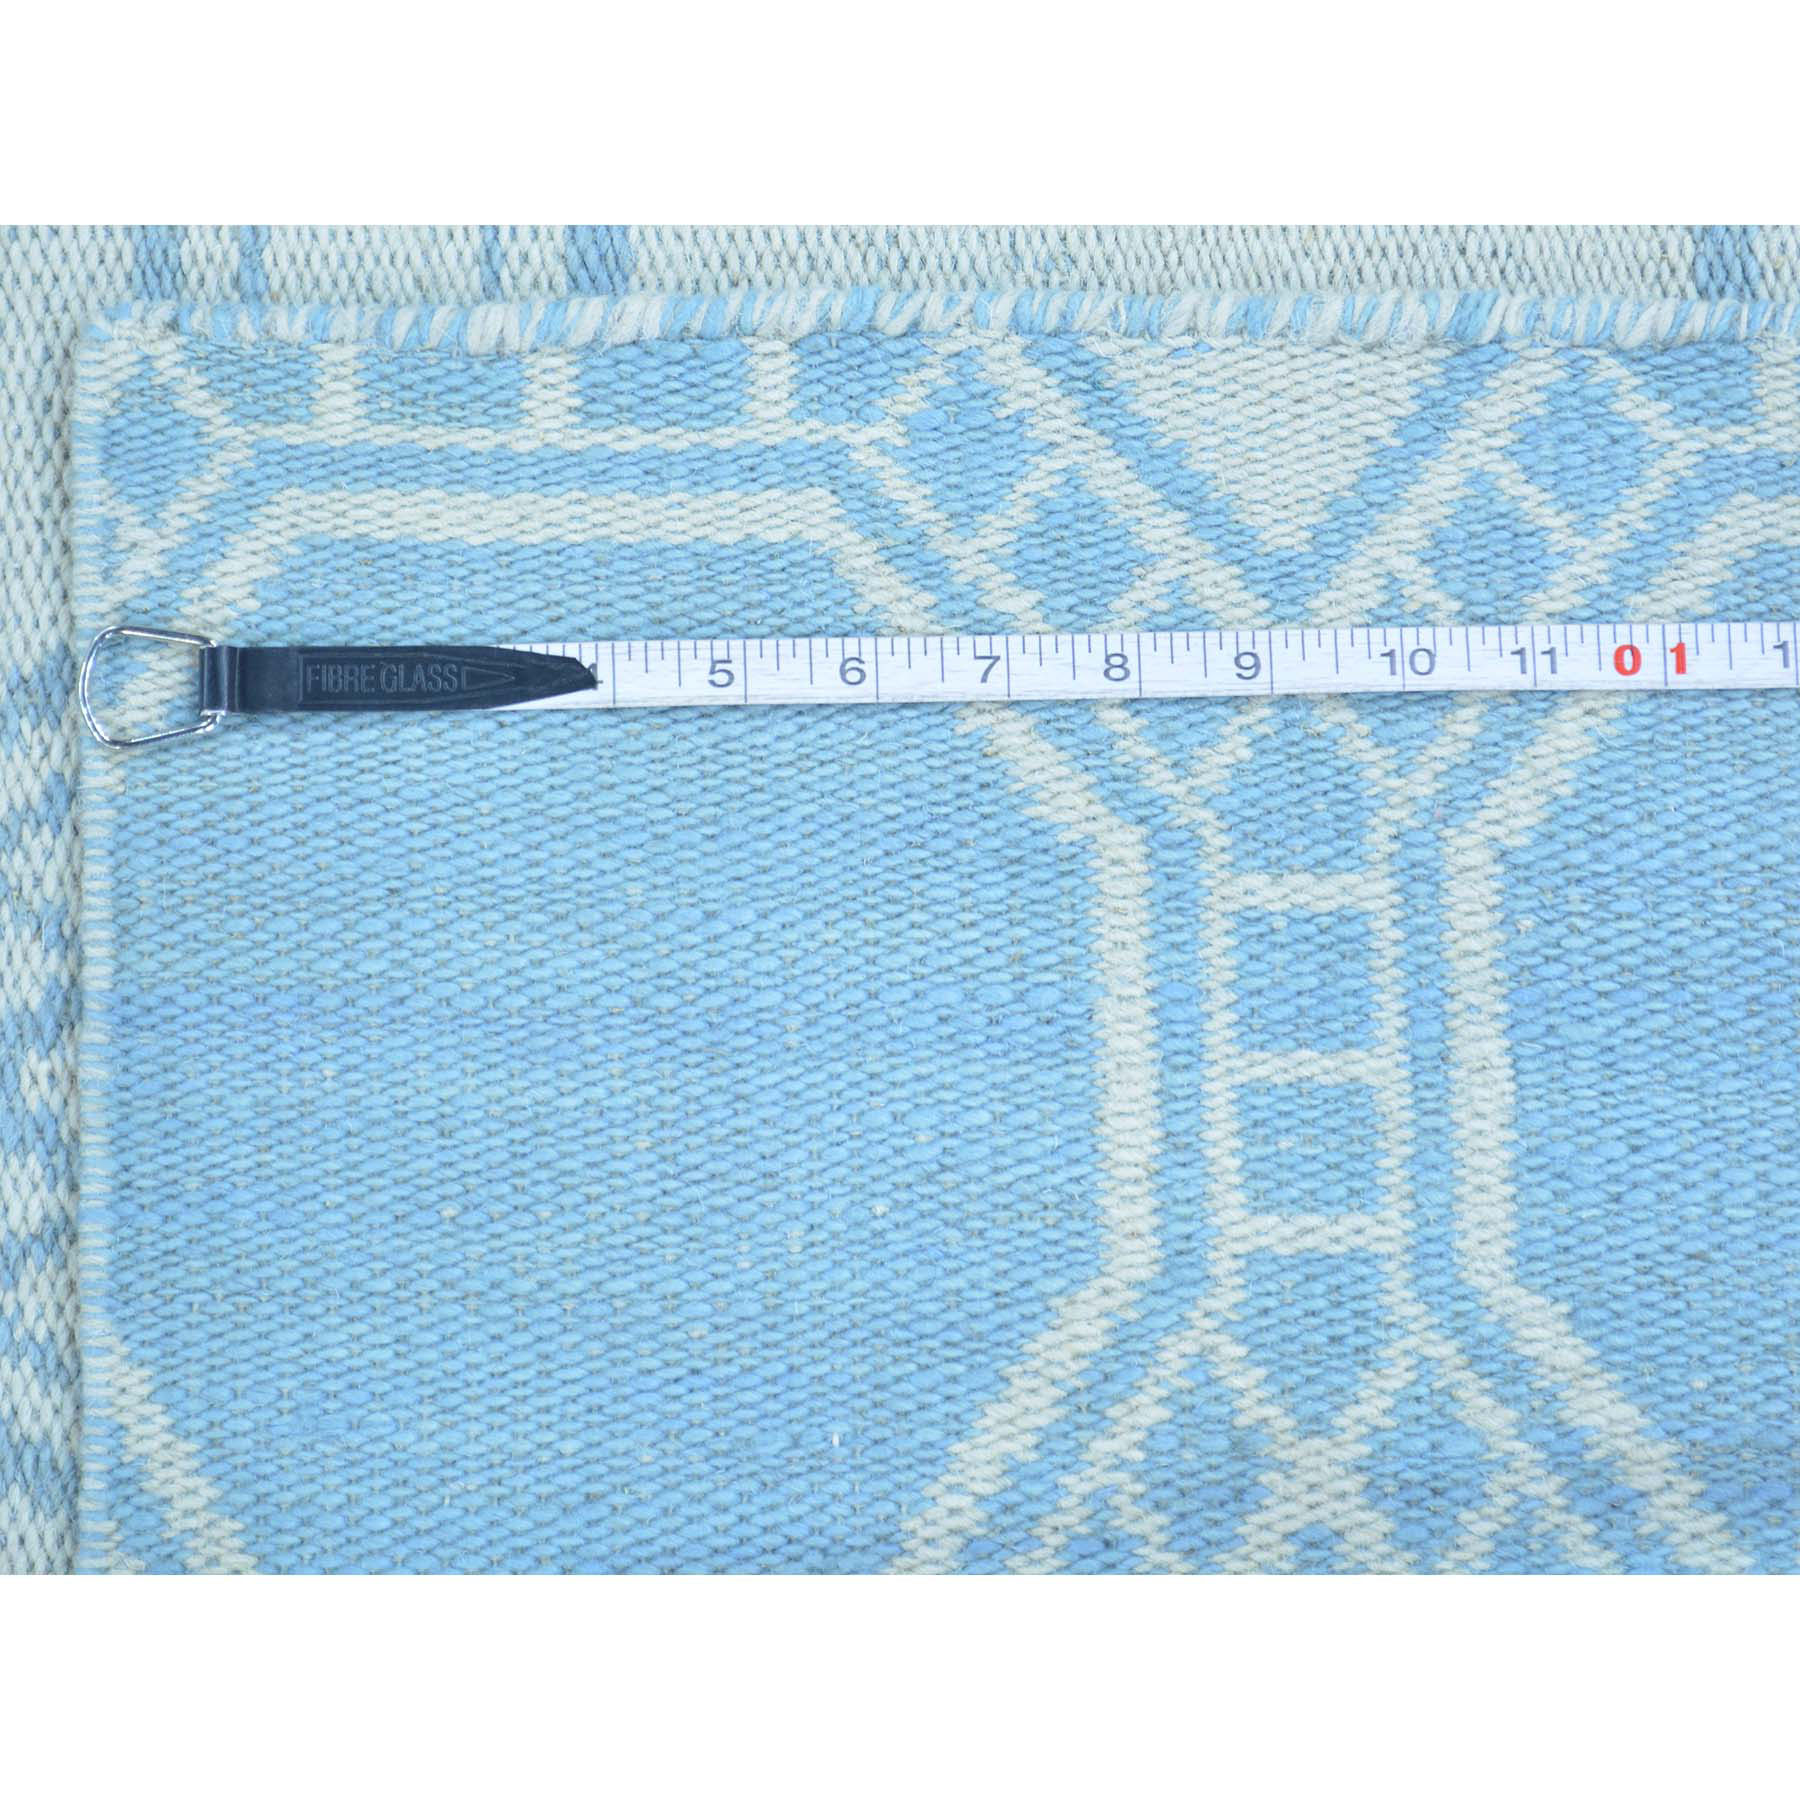 2'7"x7'10" Runner Reversible Kilim Flat Weave Hand Woven Oriental Rug 